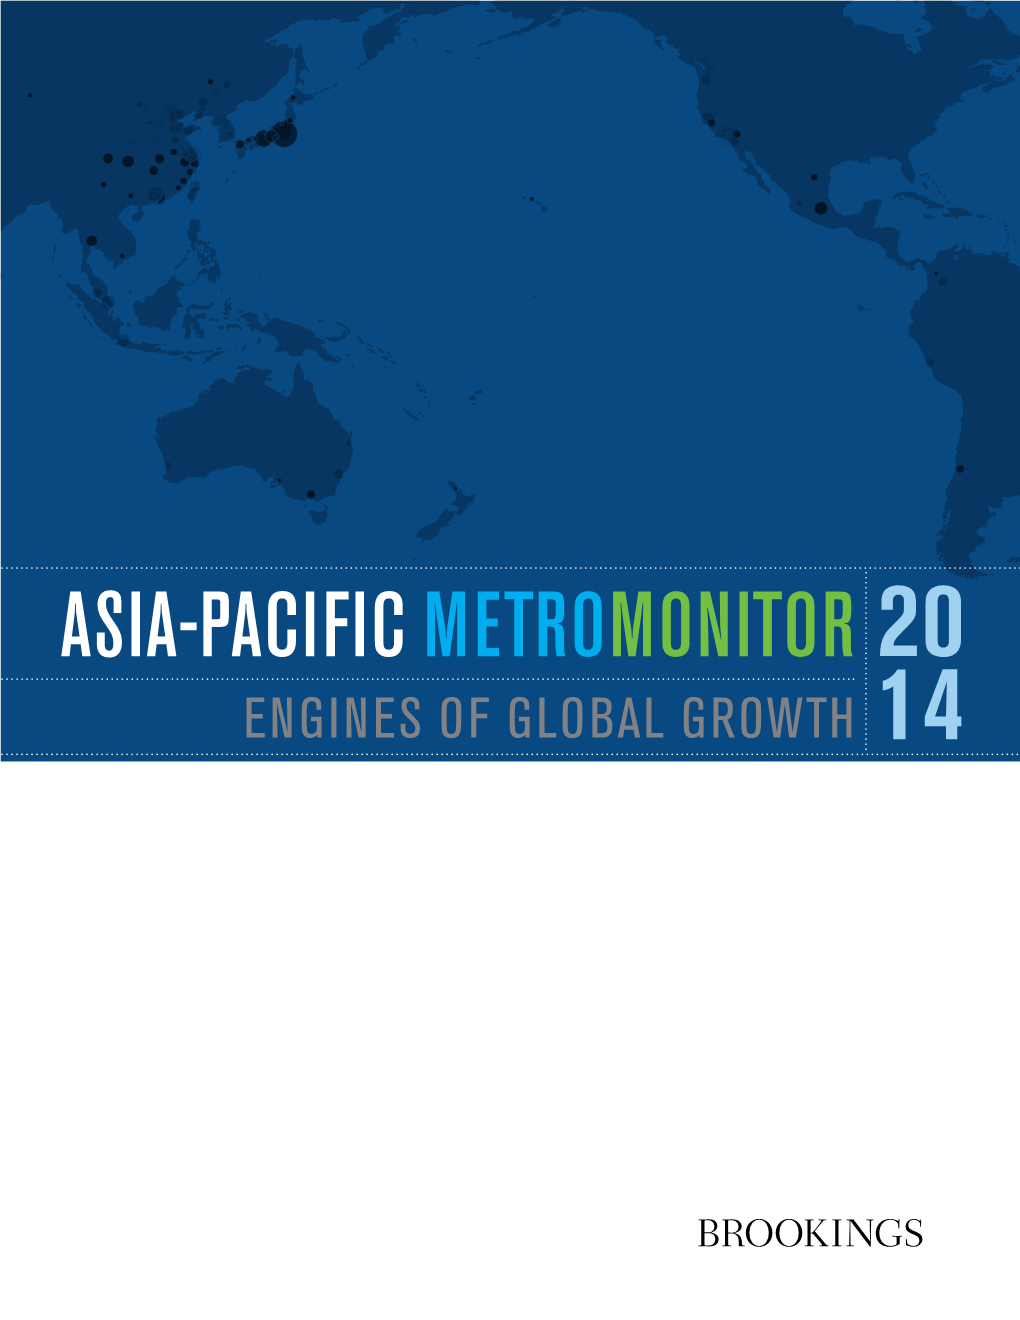 Asia-Pacific Metromonitor